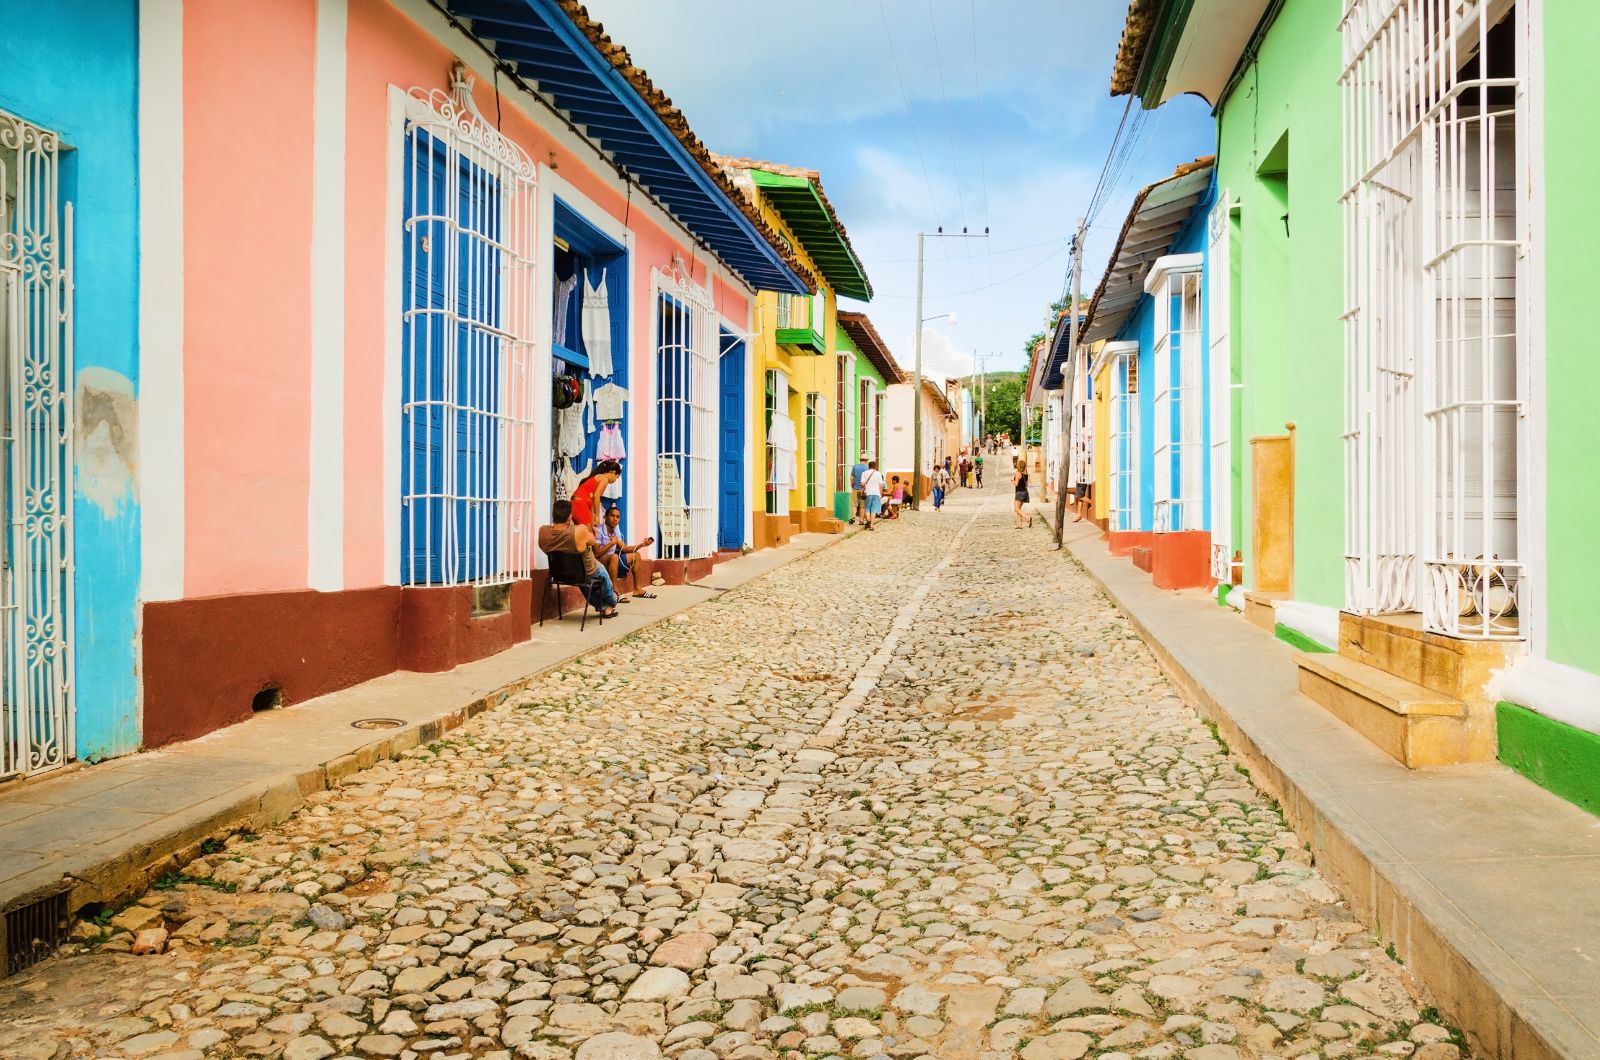 The streets of Trinidad in Cuba